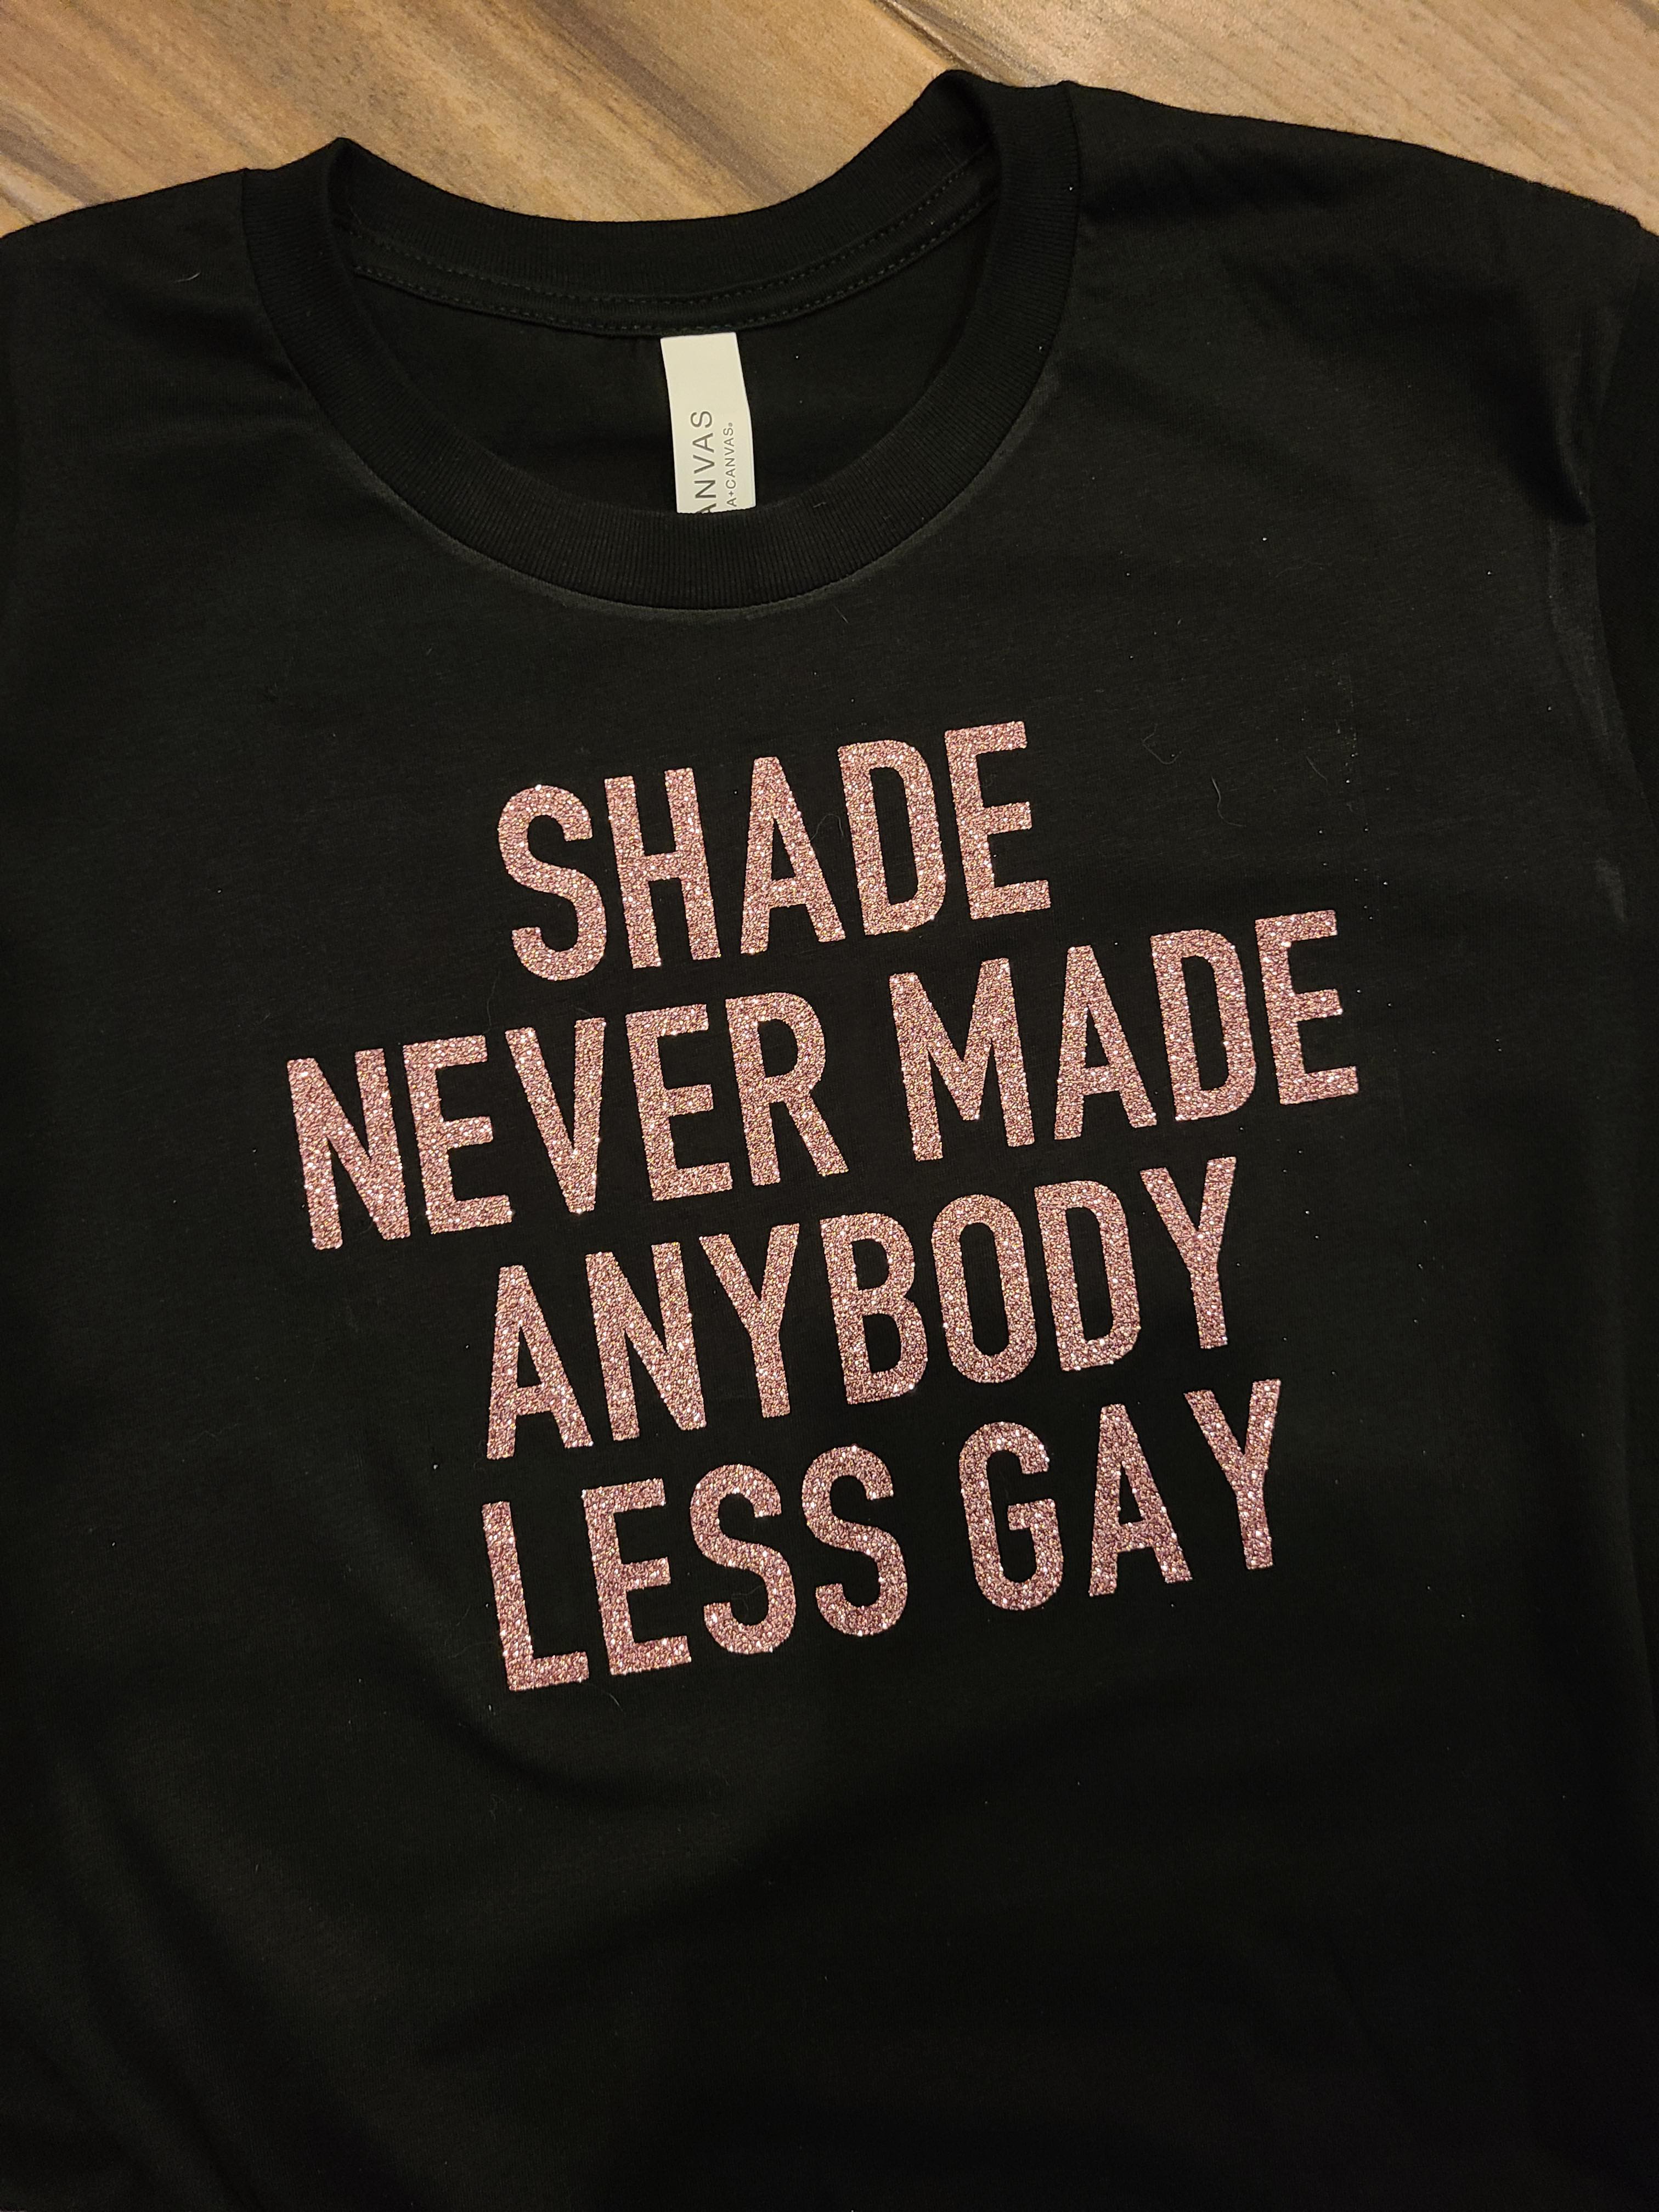 Shade Never Made Anybody Less Gay Glitter Shirt